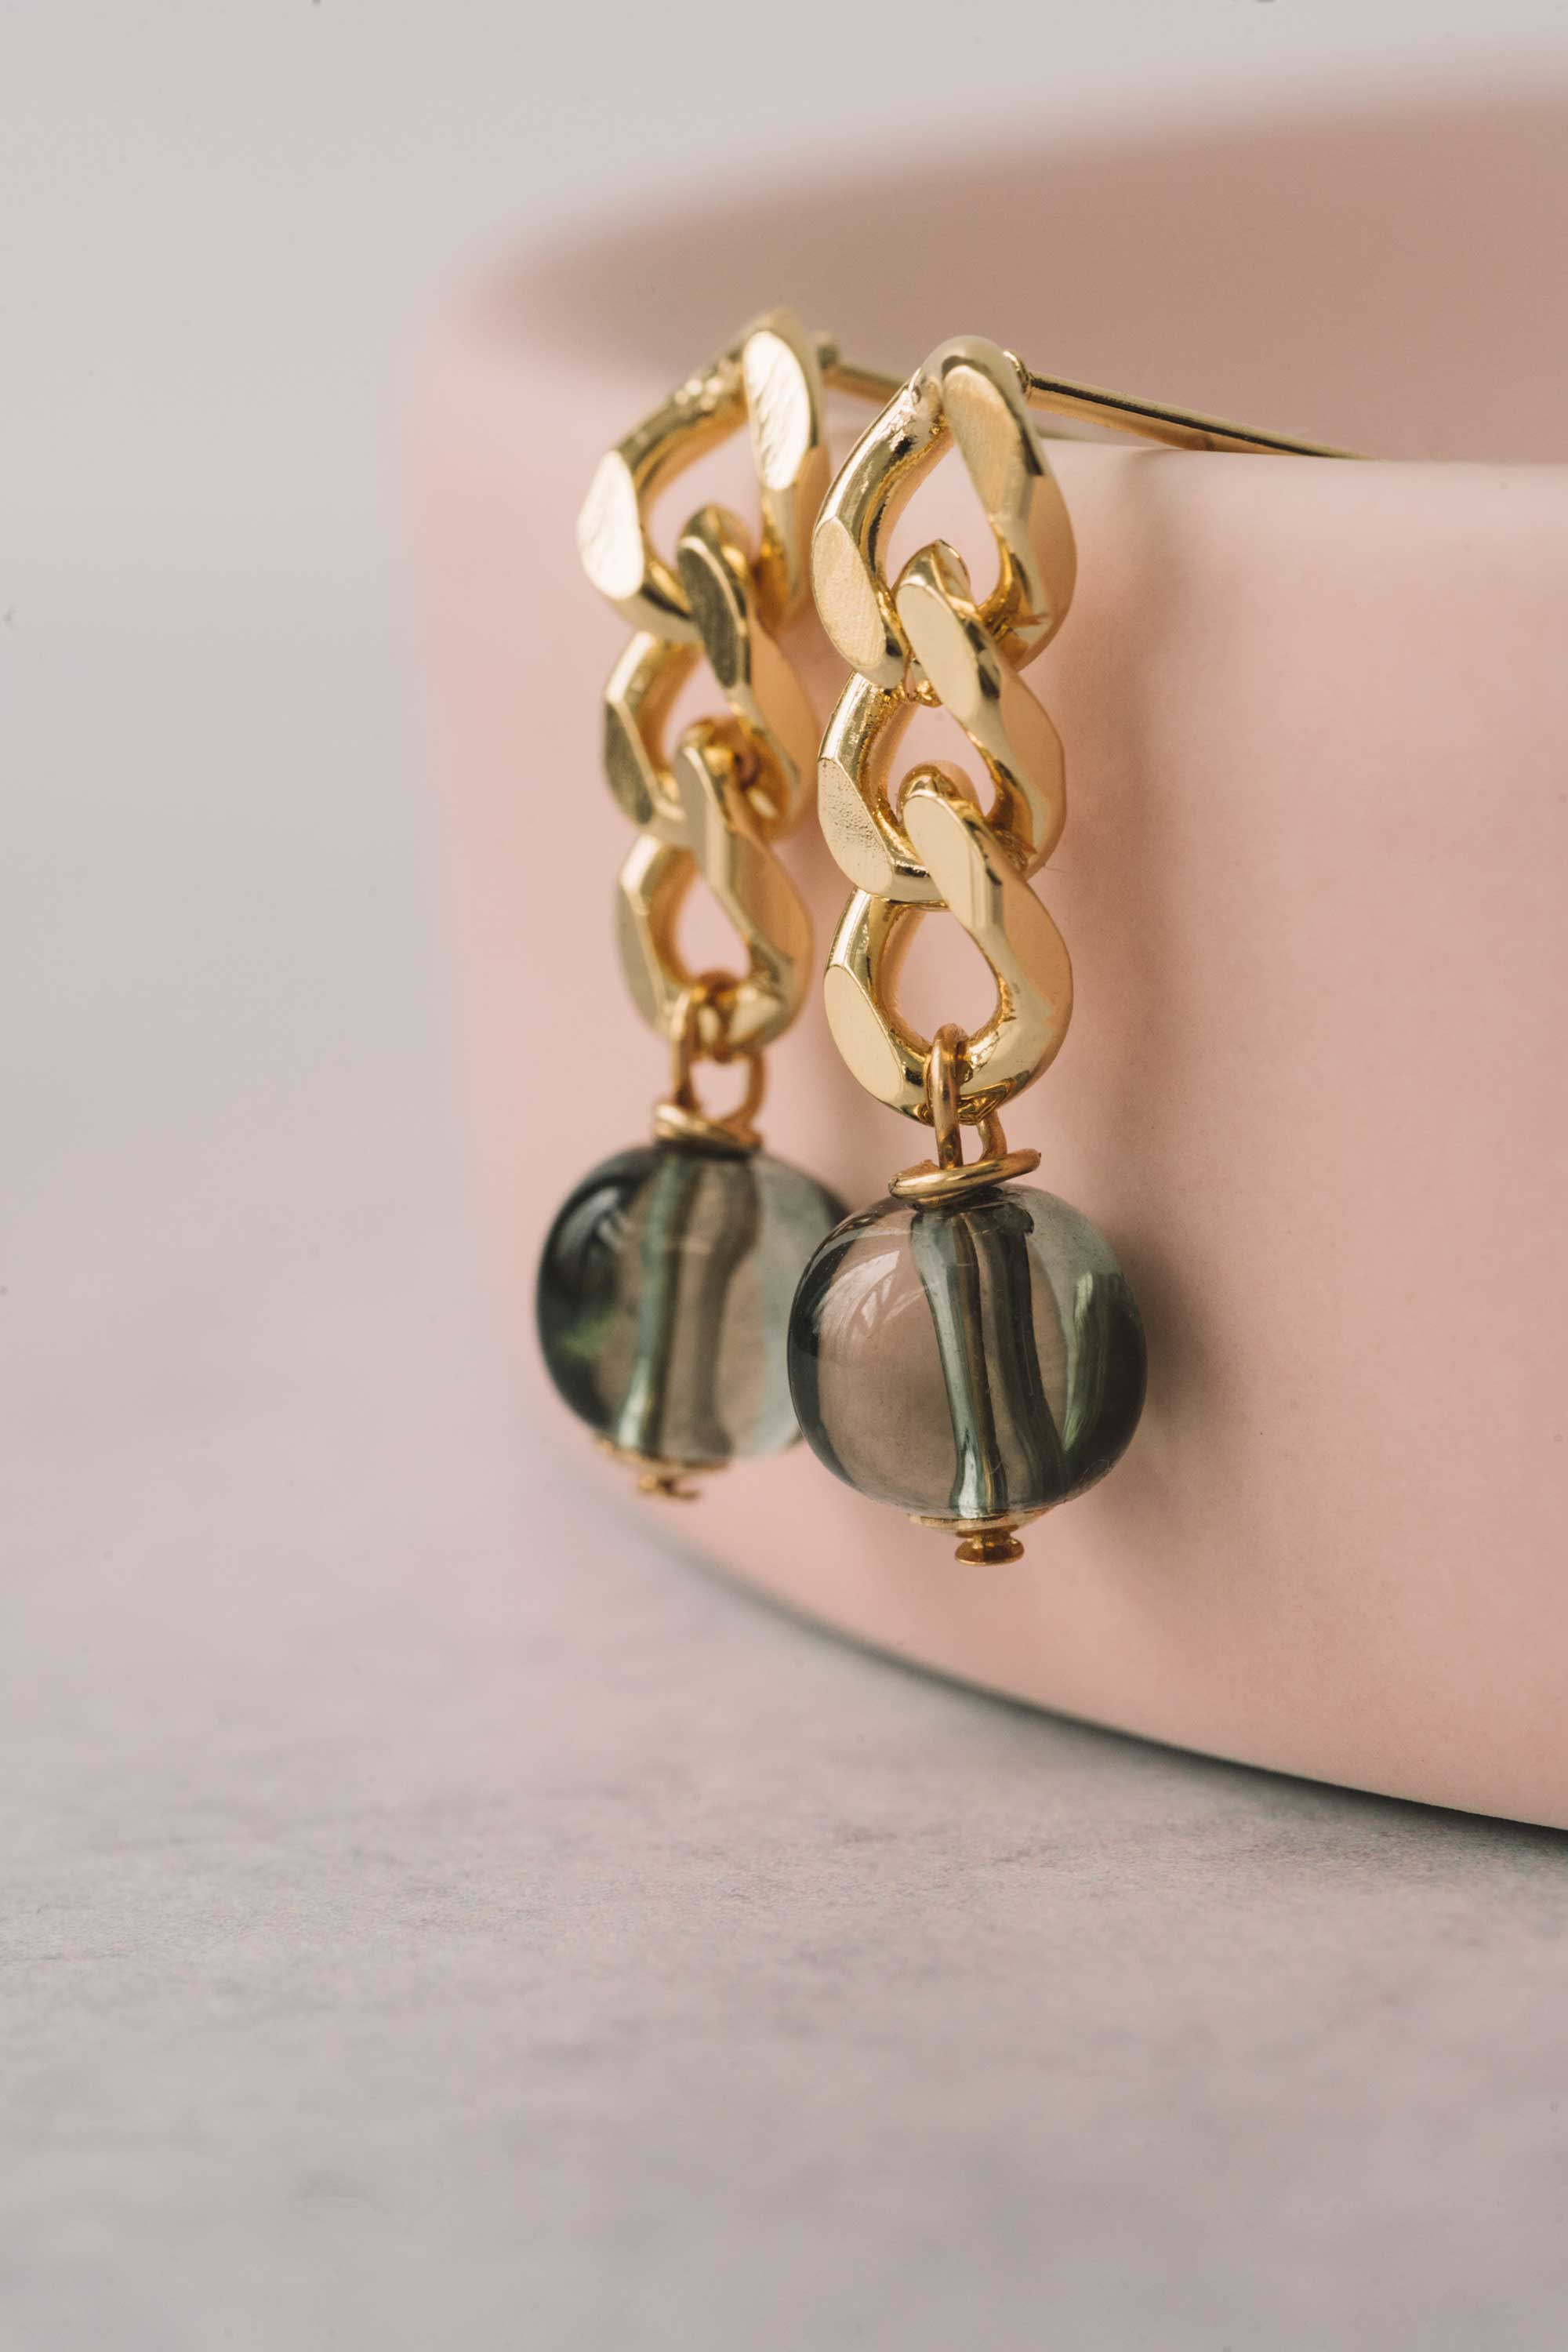 sandrine devost jewelry made in quebec canada chunky chain earrings